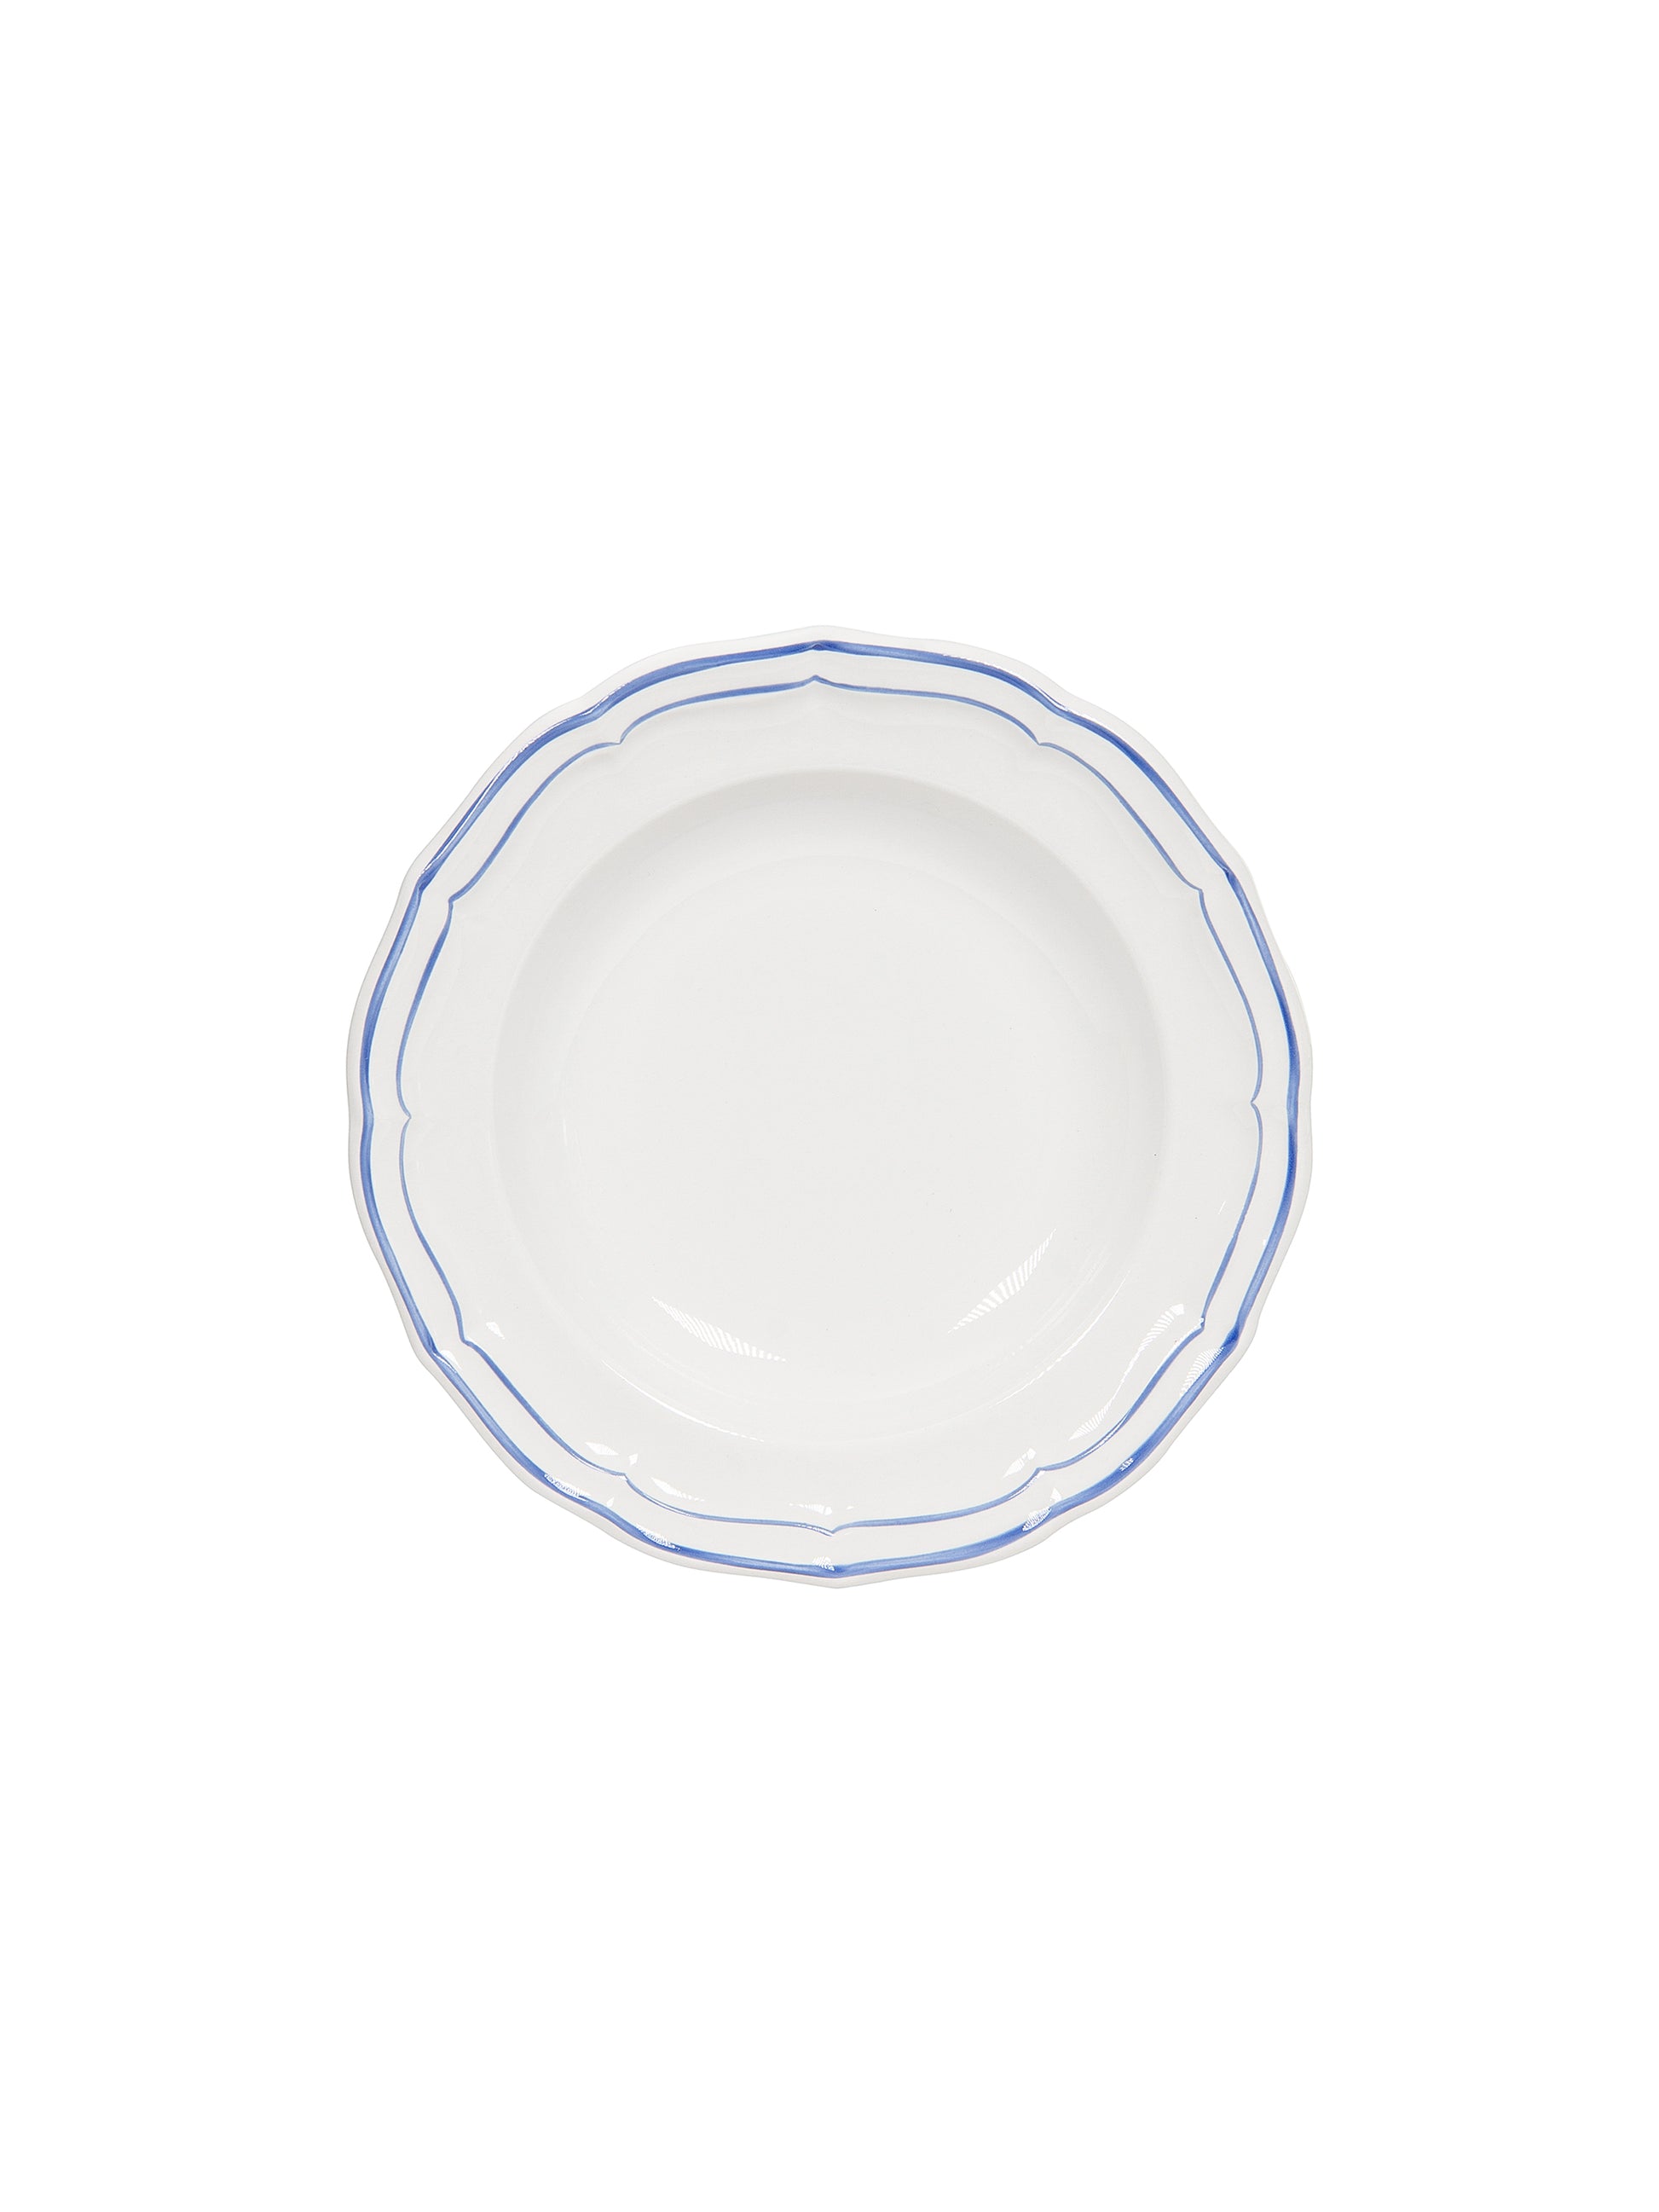 Gien Filet Bleu Soup Plate Plain Weston Table